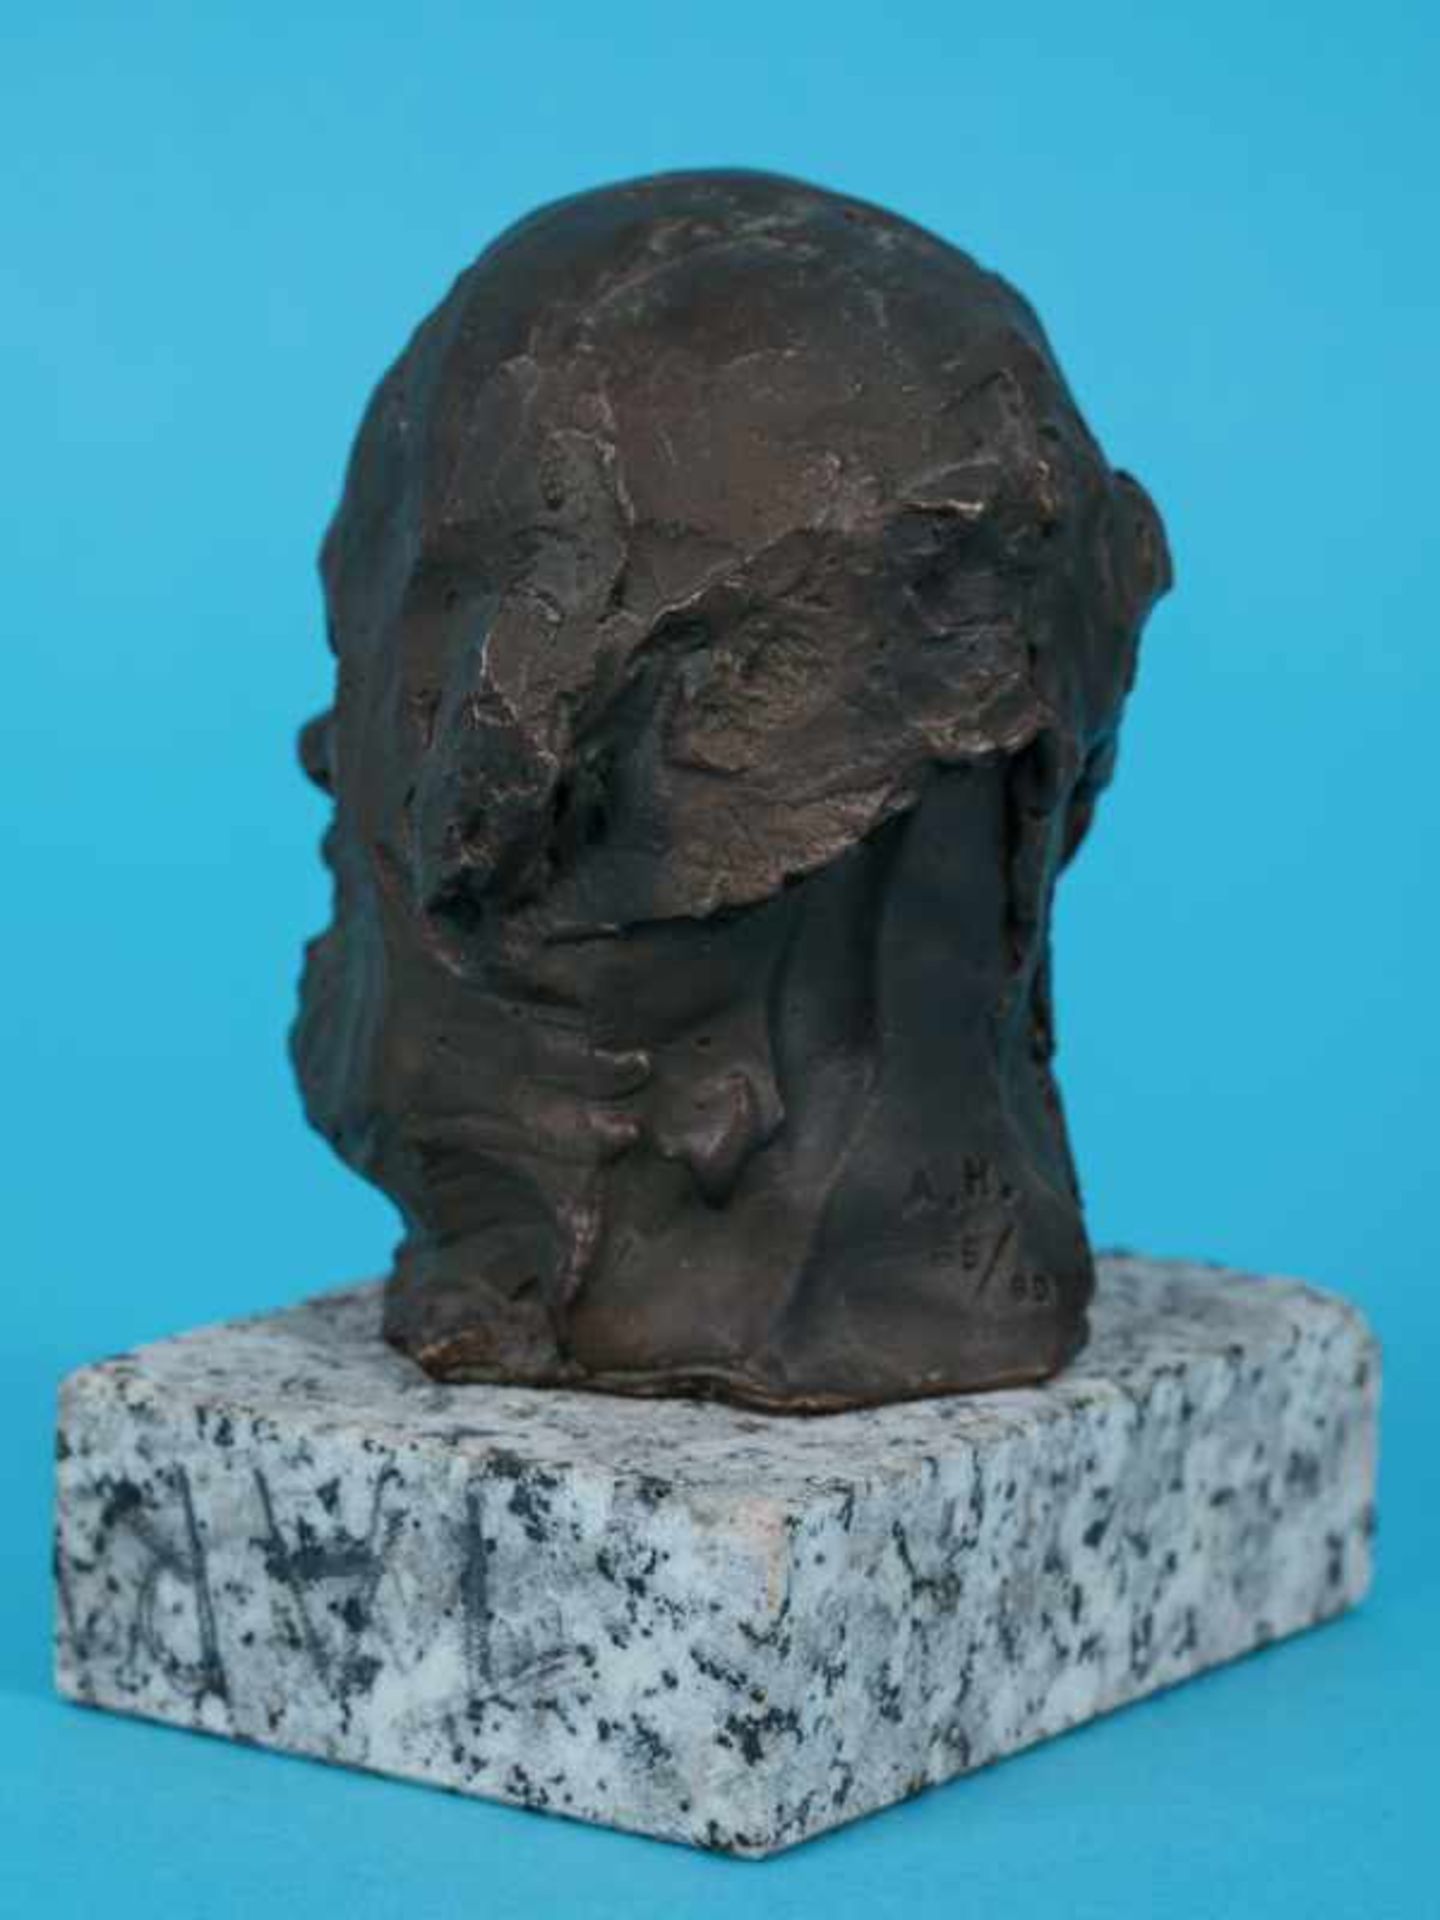 Hrdlicka, Alfred (1928 - 2009). Bronzeplastik "Selbstportrait", ca. 1986; Kopfplastik, innen hohl - Bild 8 aus 9